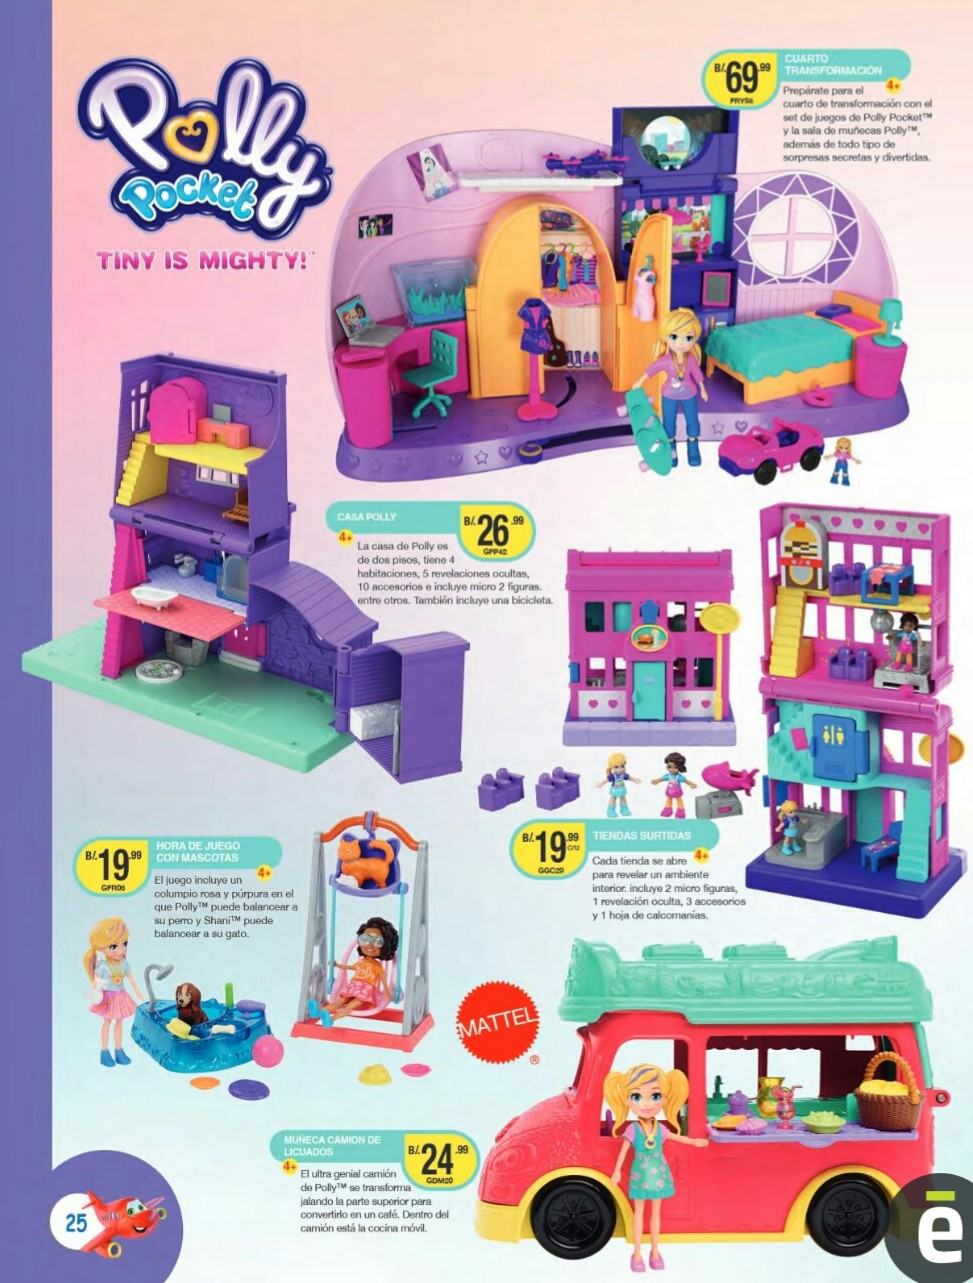 Catalogo juguetes Titan Toys 2019 p25